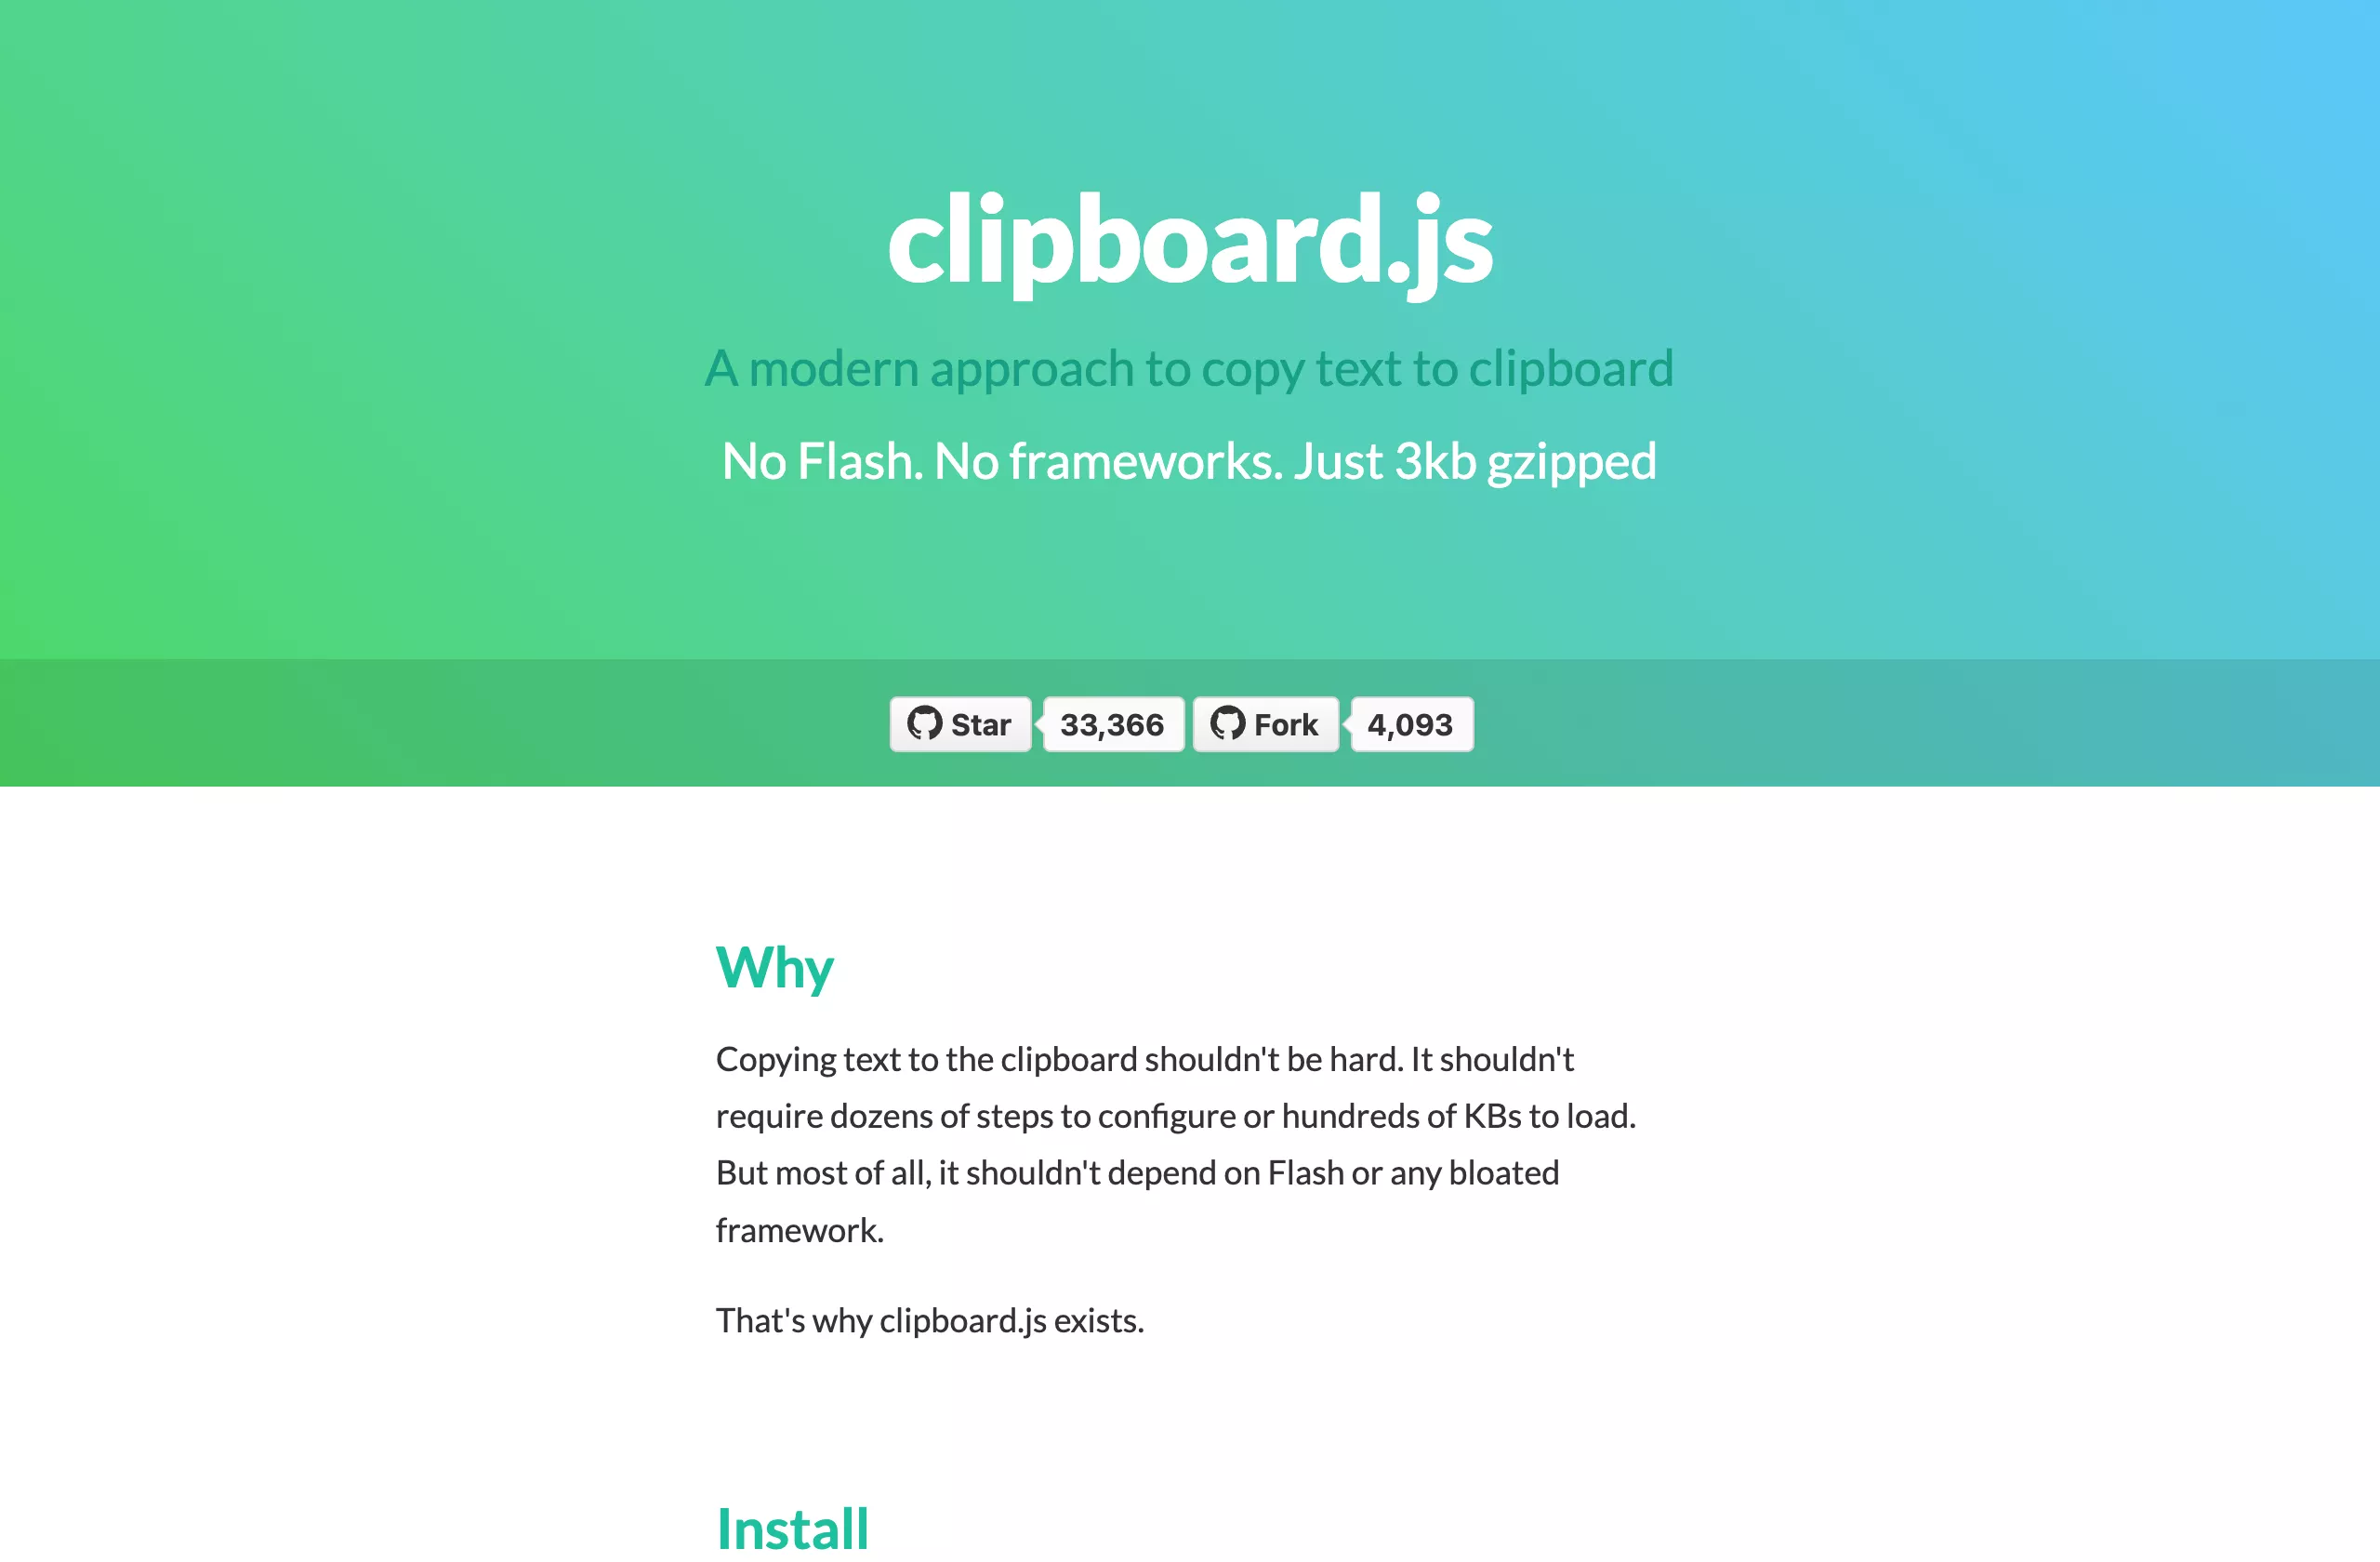 clipboard.js